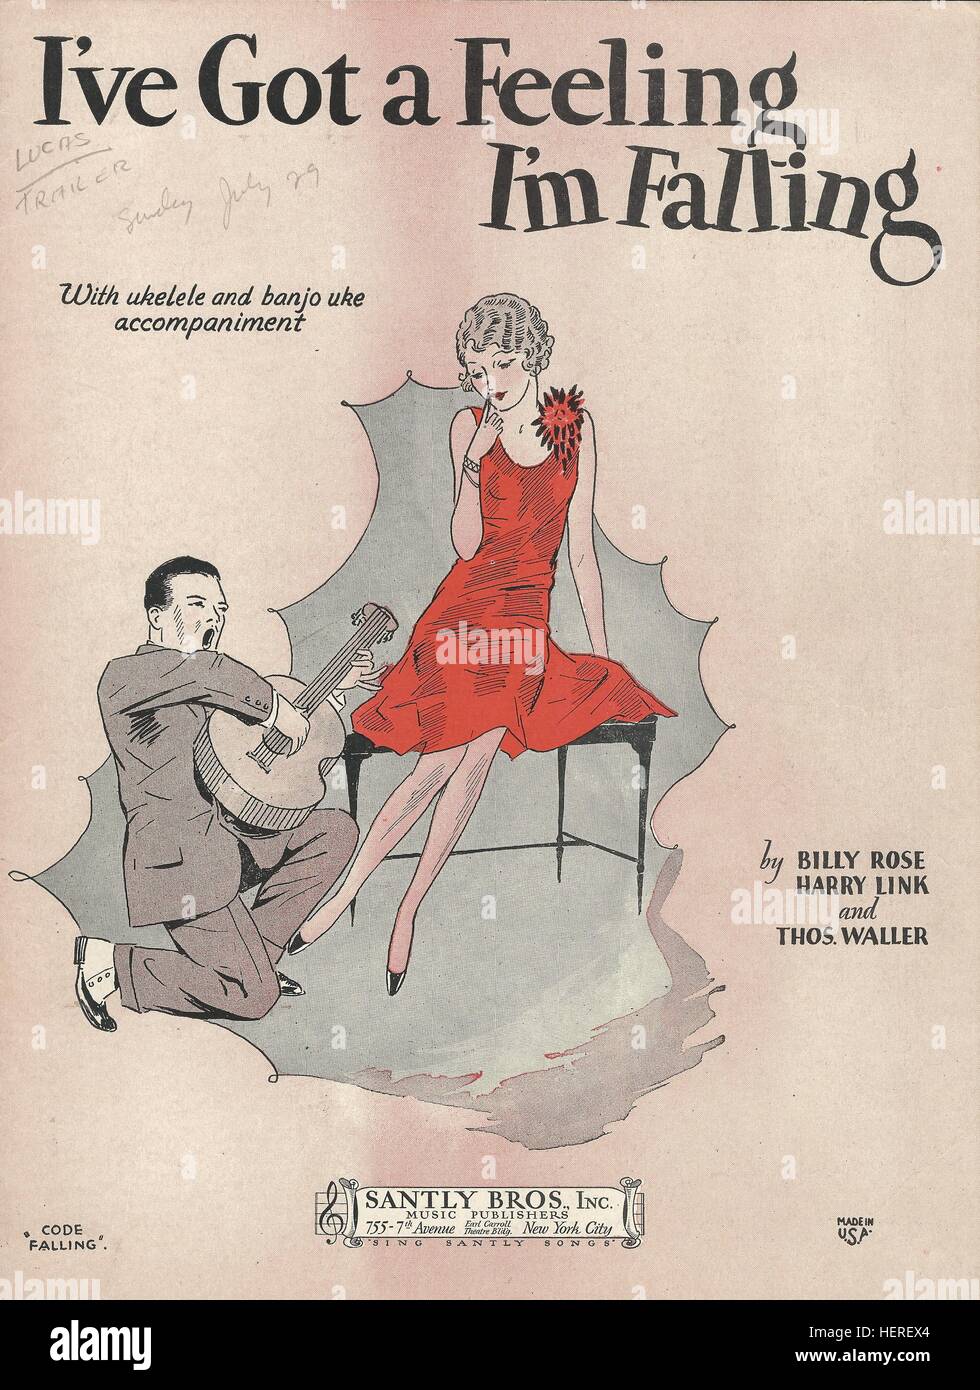 "I've Got a Feeling I'm Falling" 1929 Fats Waller Sheet Music Cover Stock Photo